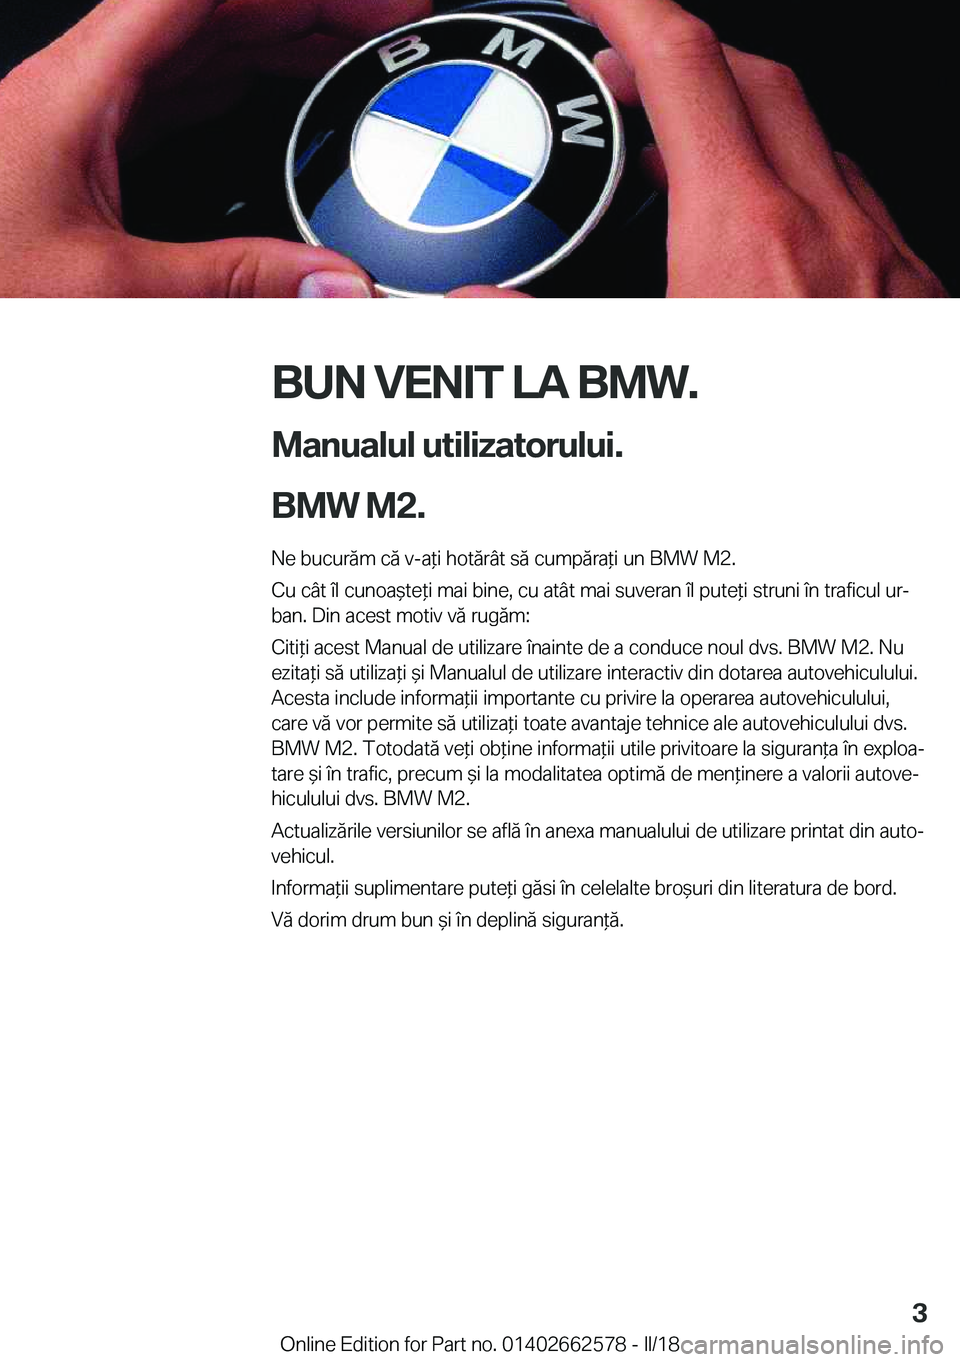 BMW M2 2018  Ghiduri De Utilizare (in Romanian) �B�U�N��V�E�N�I�T��L�A��B�M�W�.�M�a�n�u�a�l�u�l��u�t�i�l�i�z�a�t�o�r�u�l�u�i�.
�B�M�W��M�2�.� �N�e� �b�u�c�u�r�